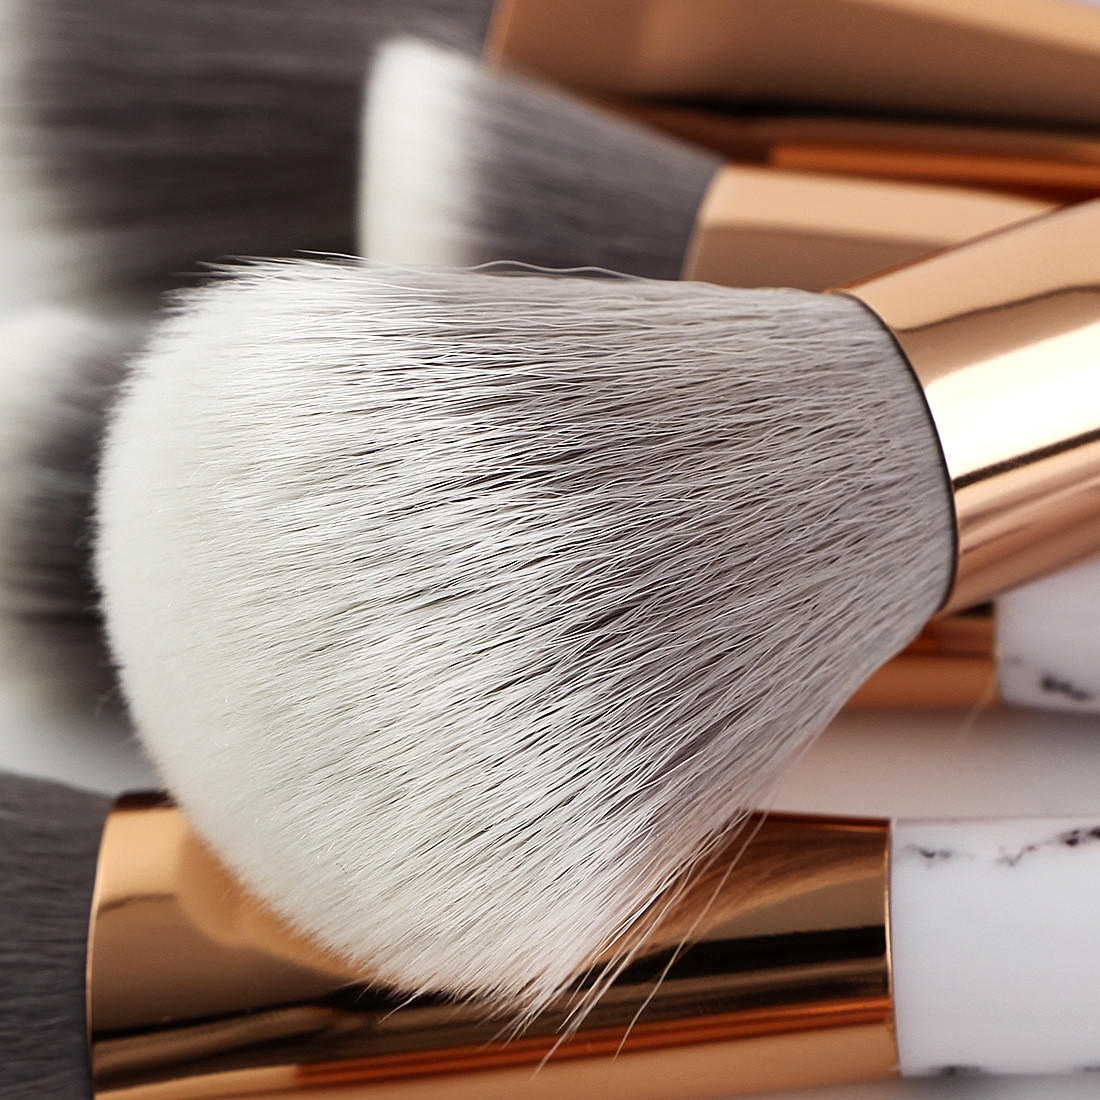 Suprabeauty professional affordable makeup brush sets hot sale for loose powder